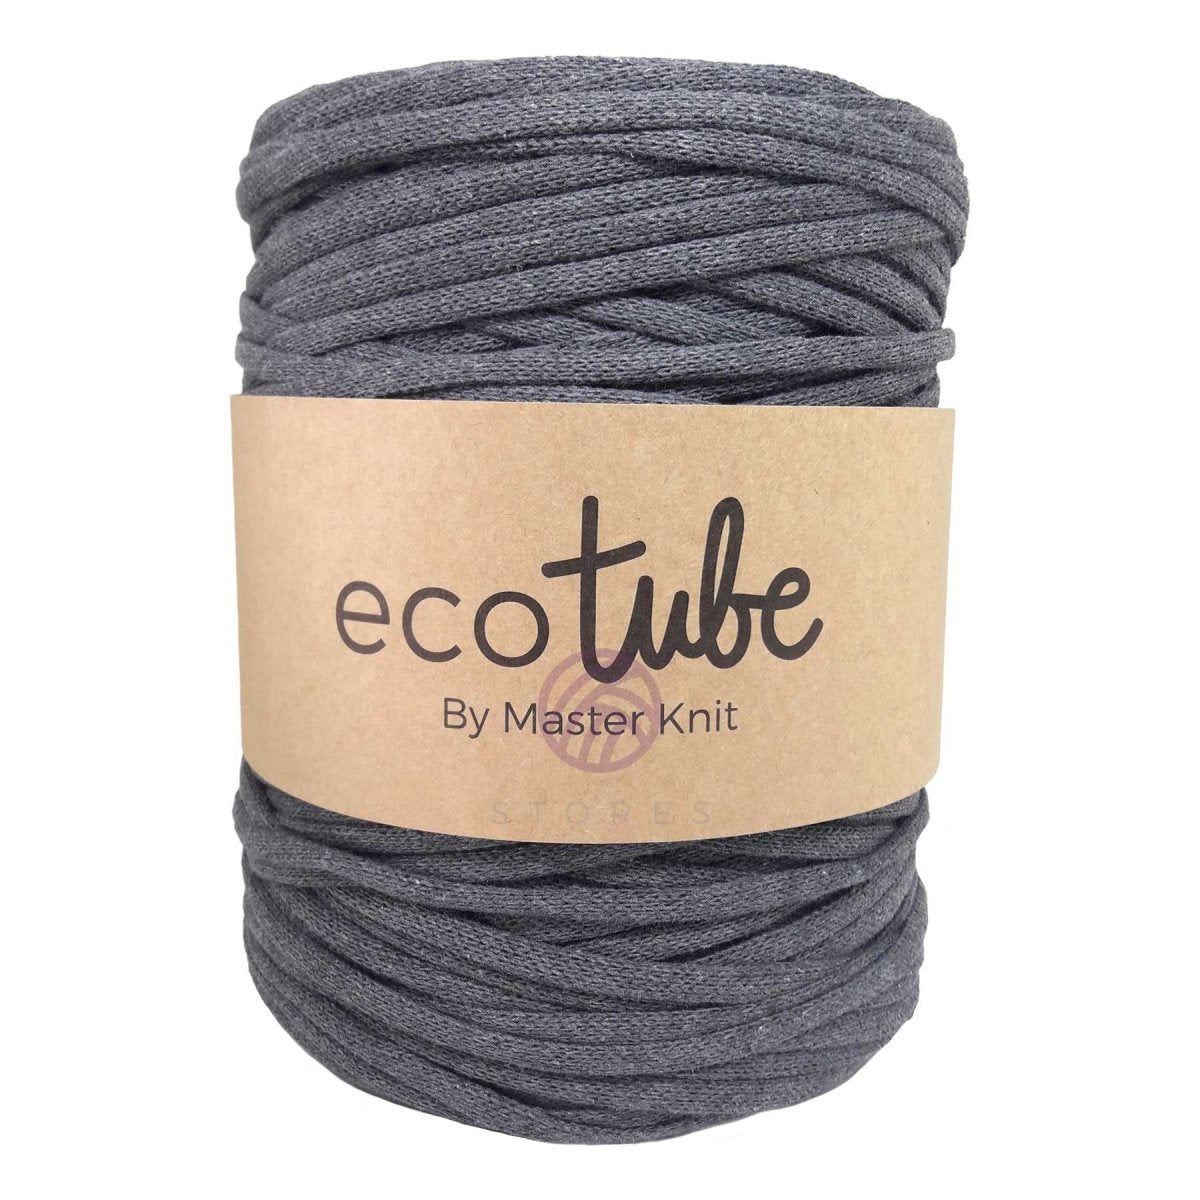 ECO TUBE - Crochetstores9380-627